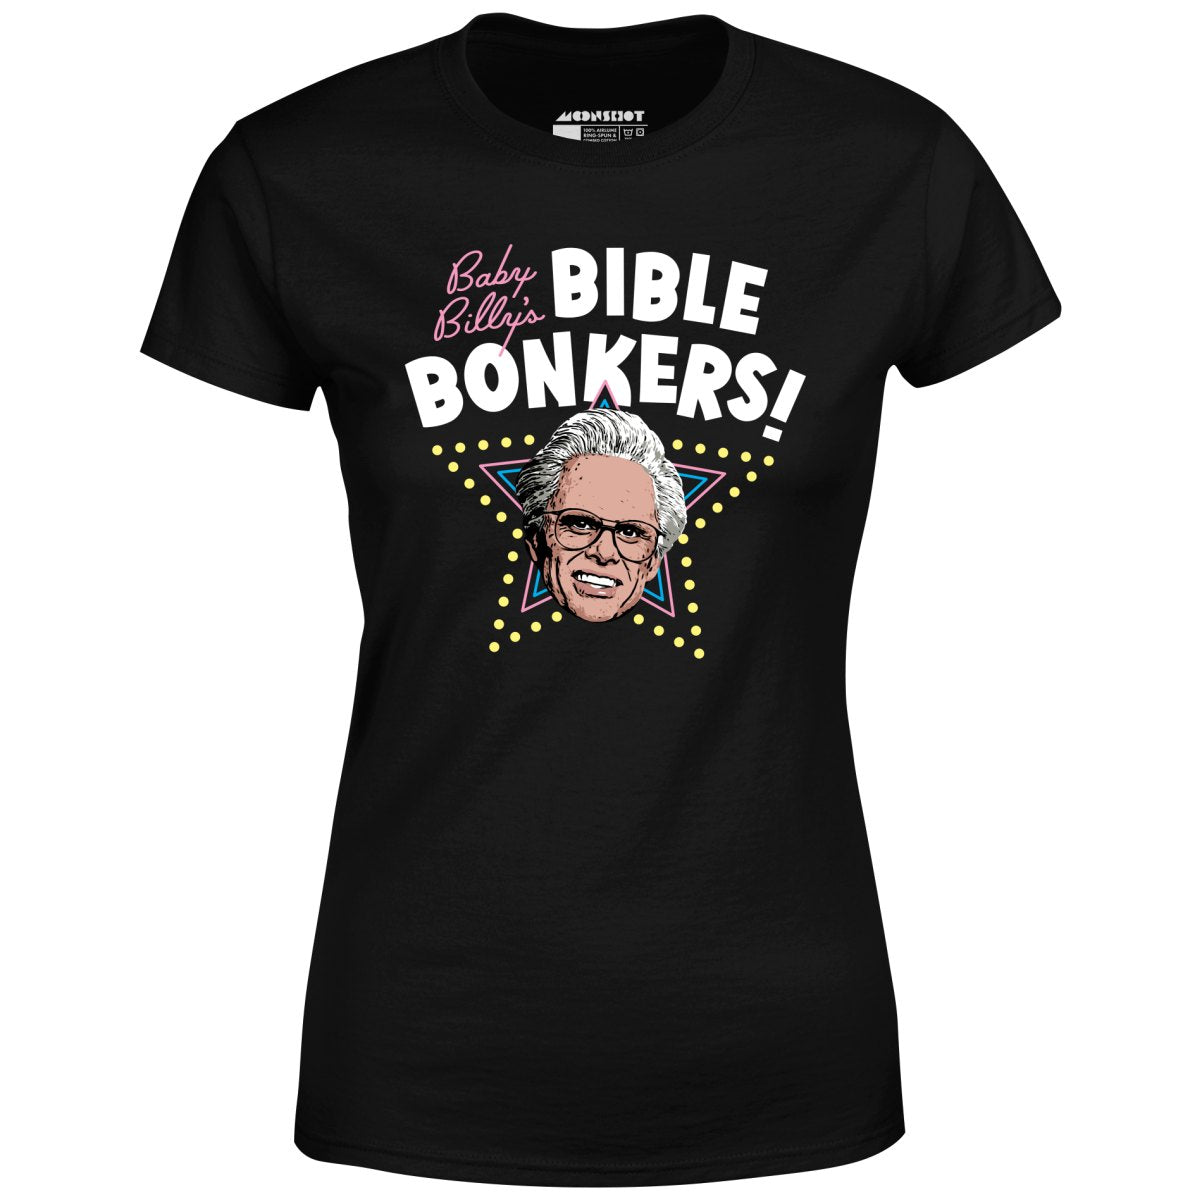 Baby Billy's Bible Bonkers - Women's T-Shirt